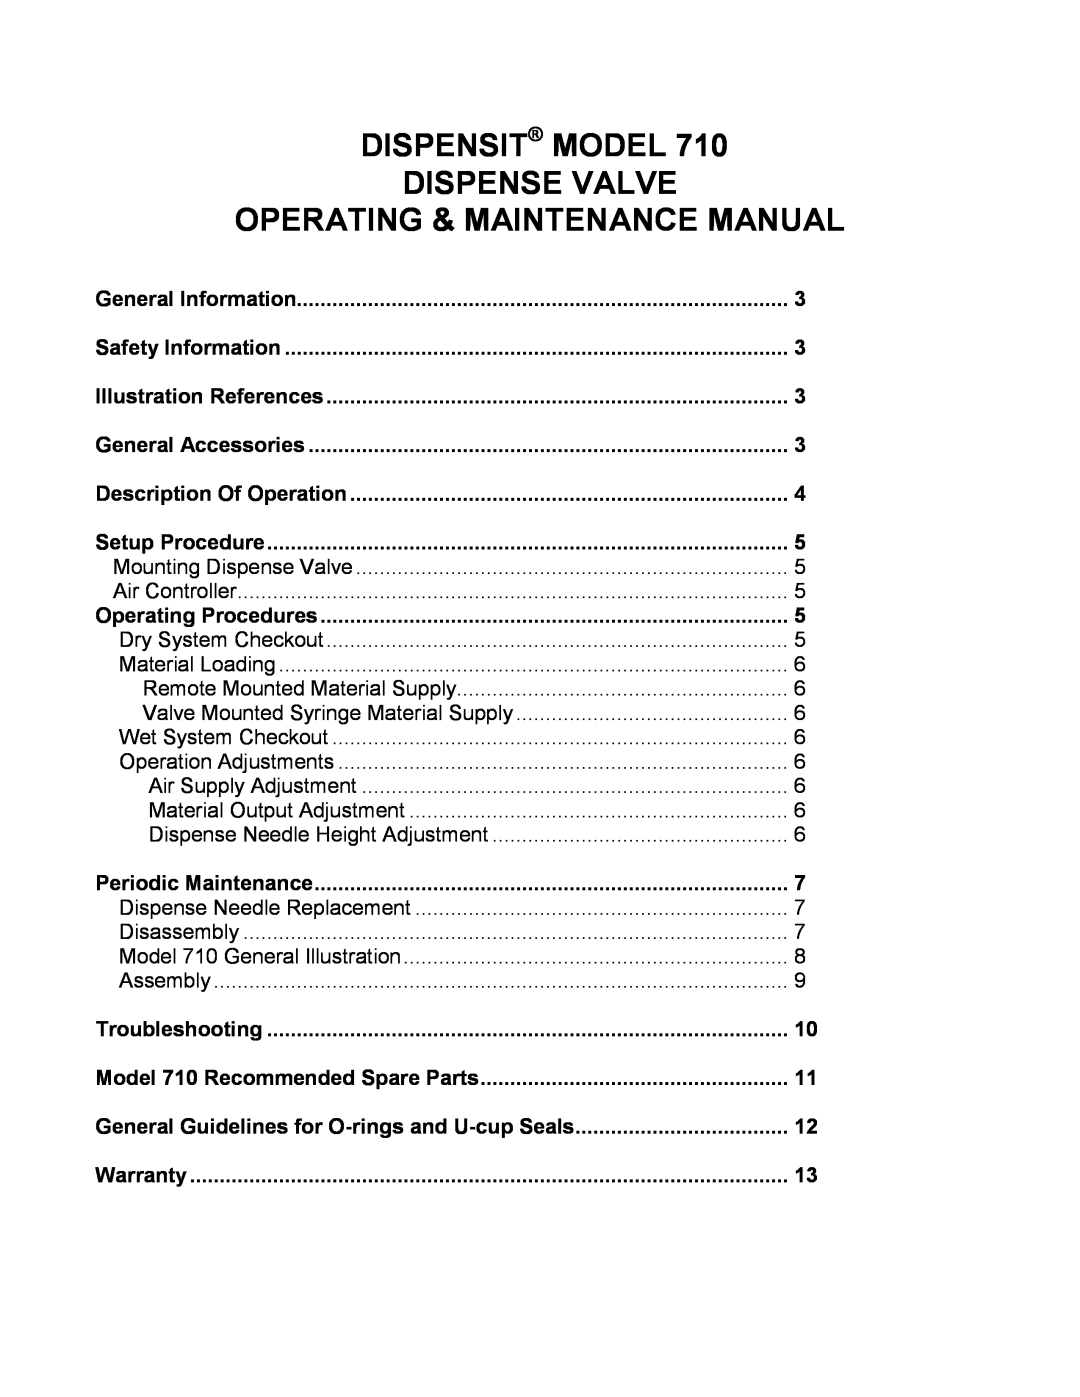 Graco 710 important safety instructions Dispensit Model Dispense Valve, Operating & Maintenance Manual 